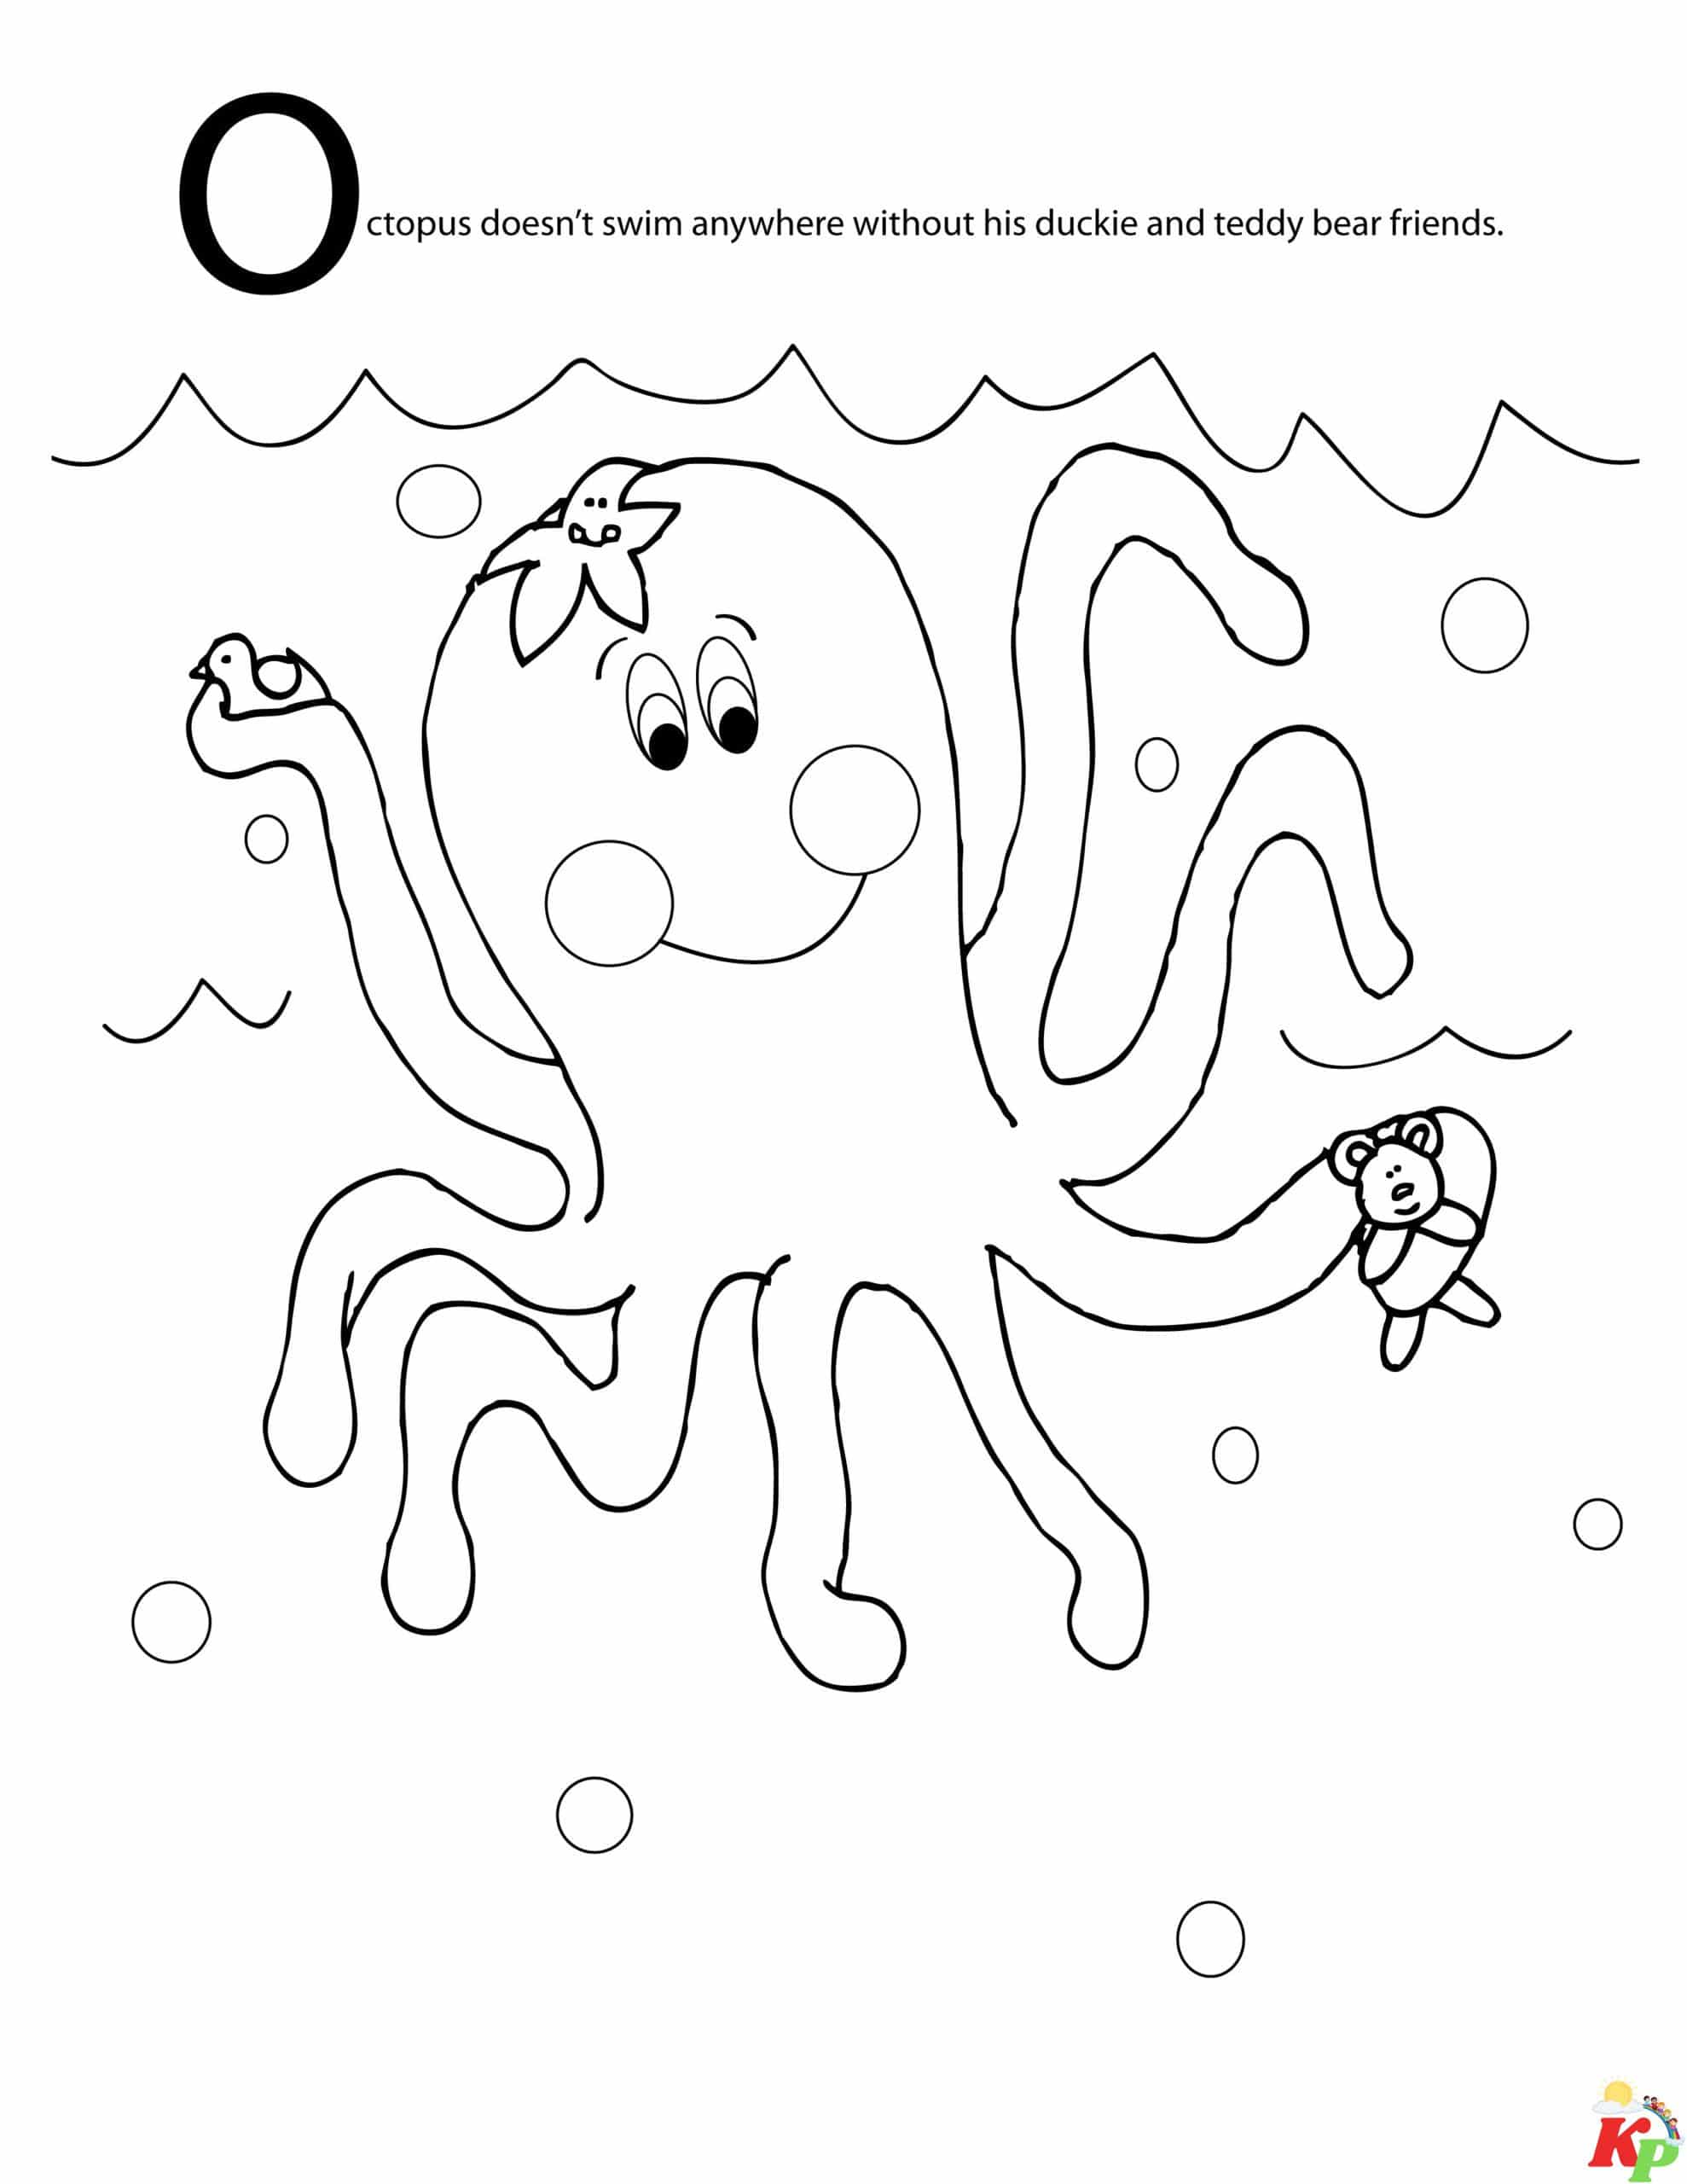 Octopus13